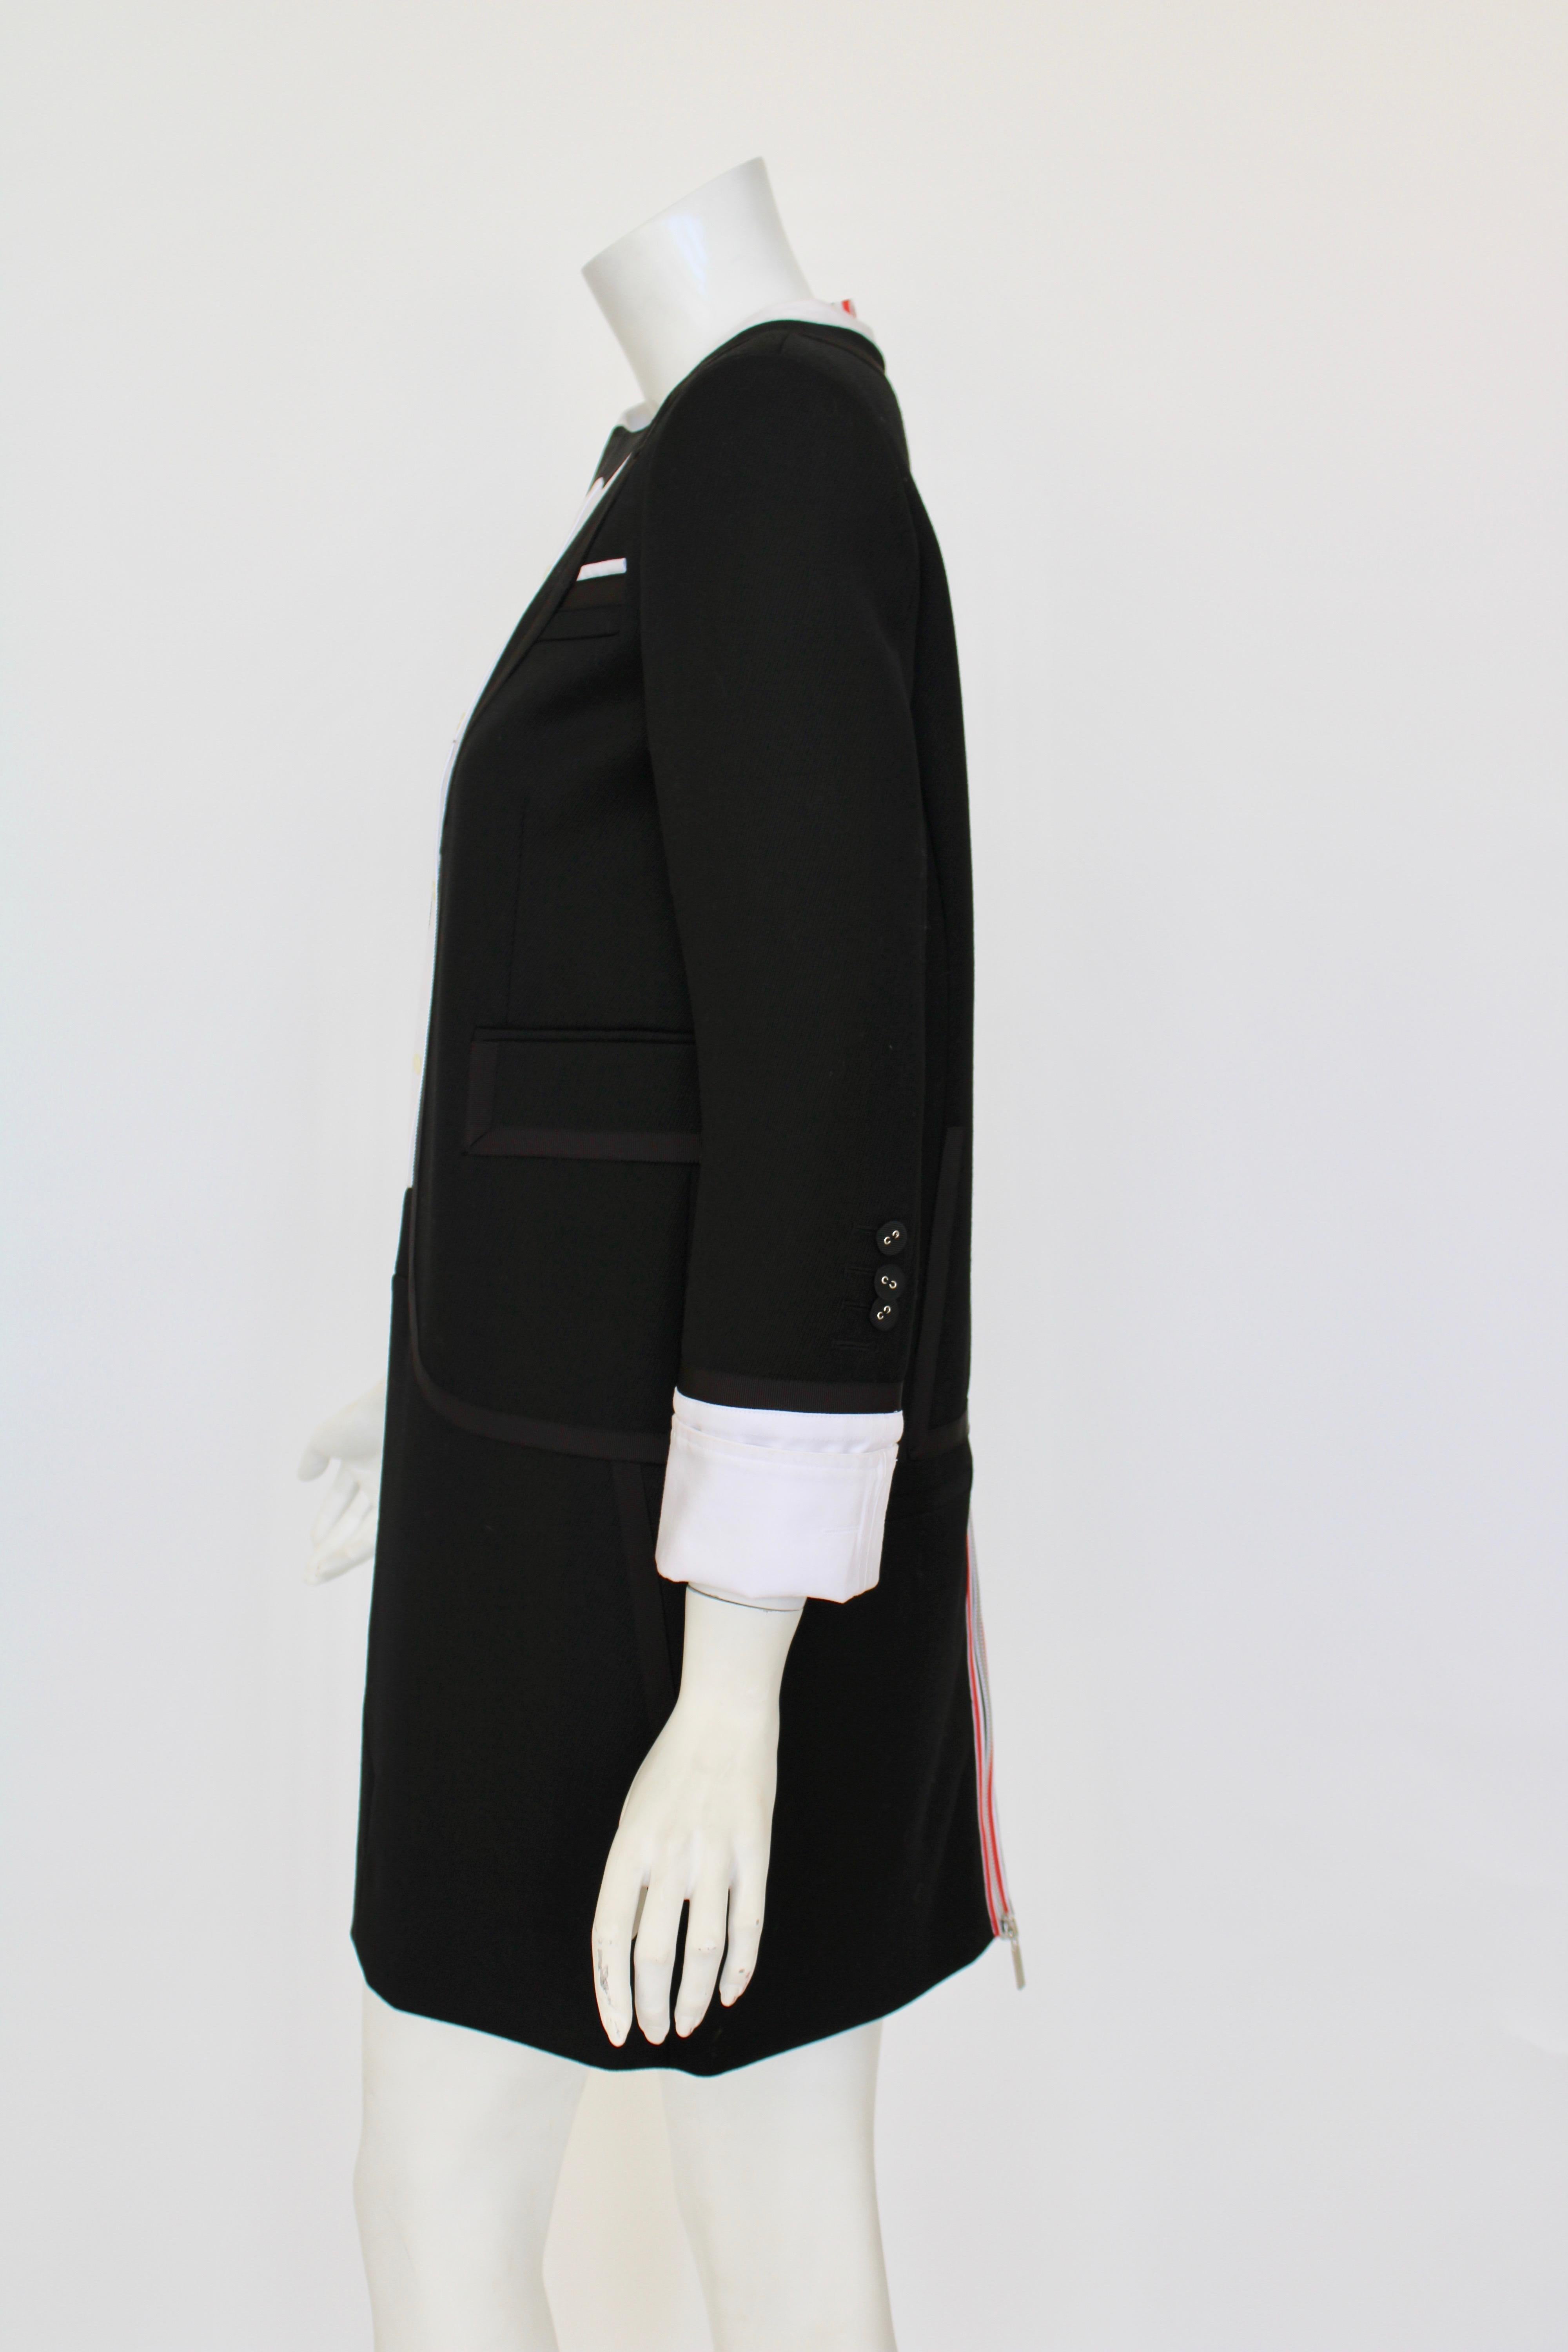 Thom Browne tuxedo trompe l'oeil dress For Sale 4